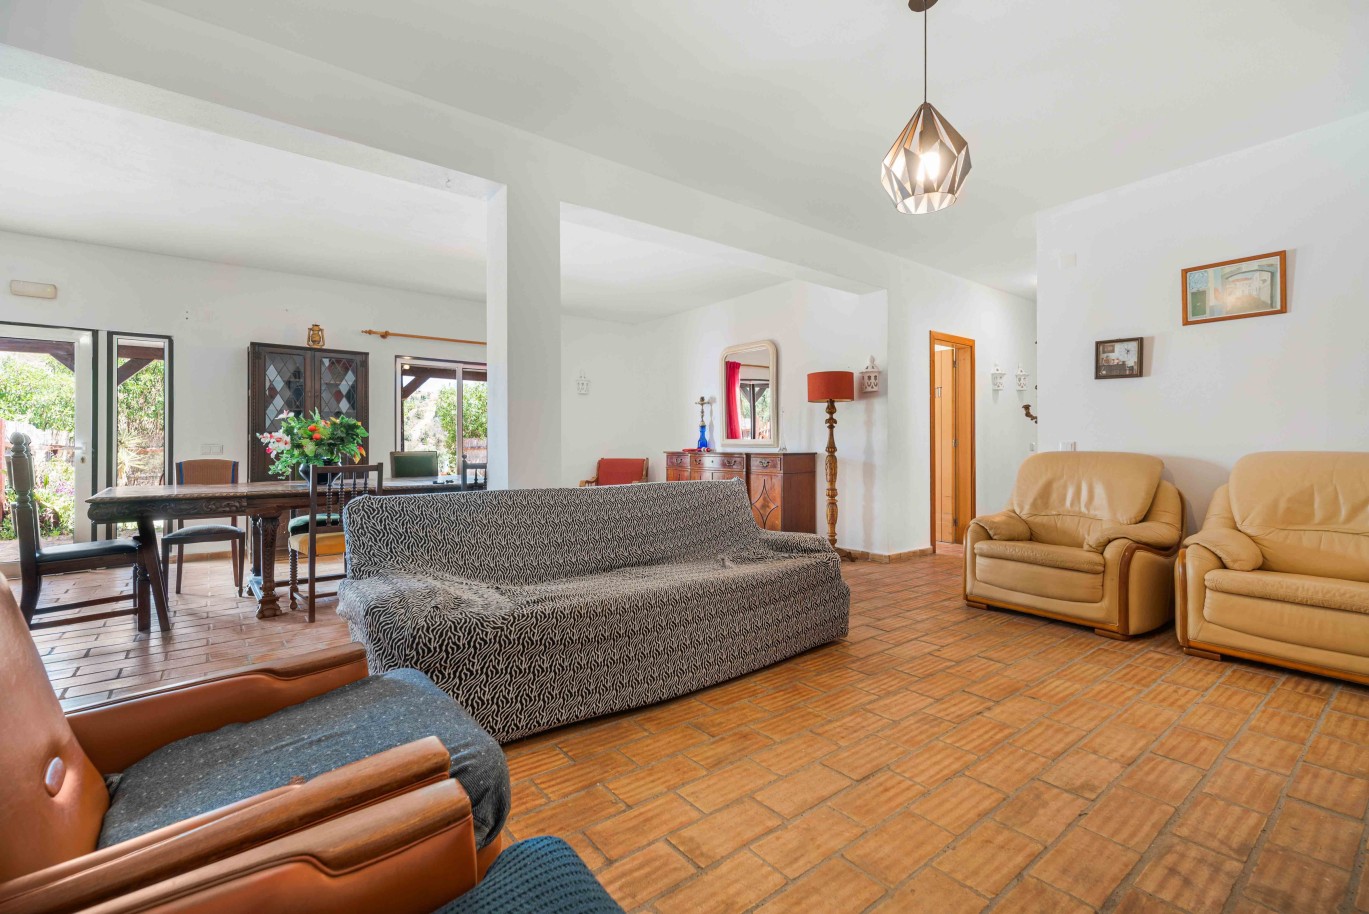 9 Bedroom Country Villa à vendre à Pereira, Algarve_231595